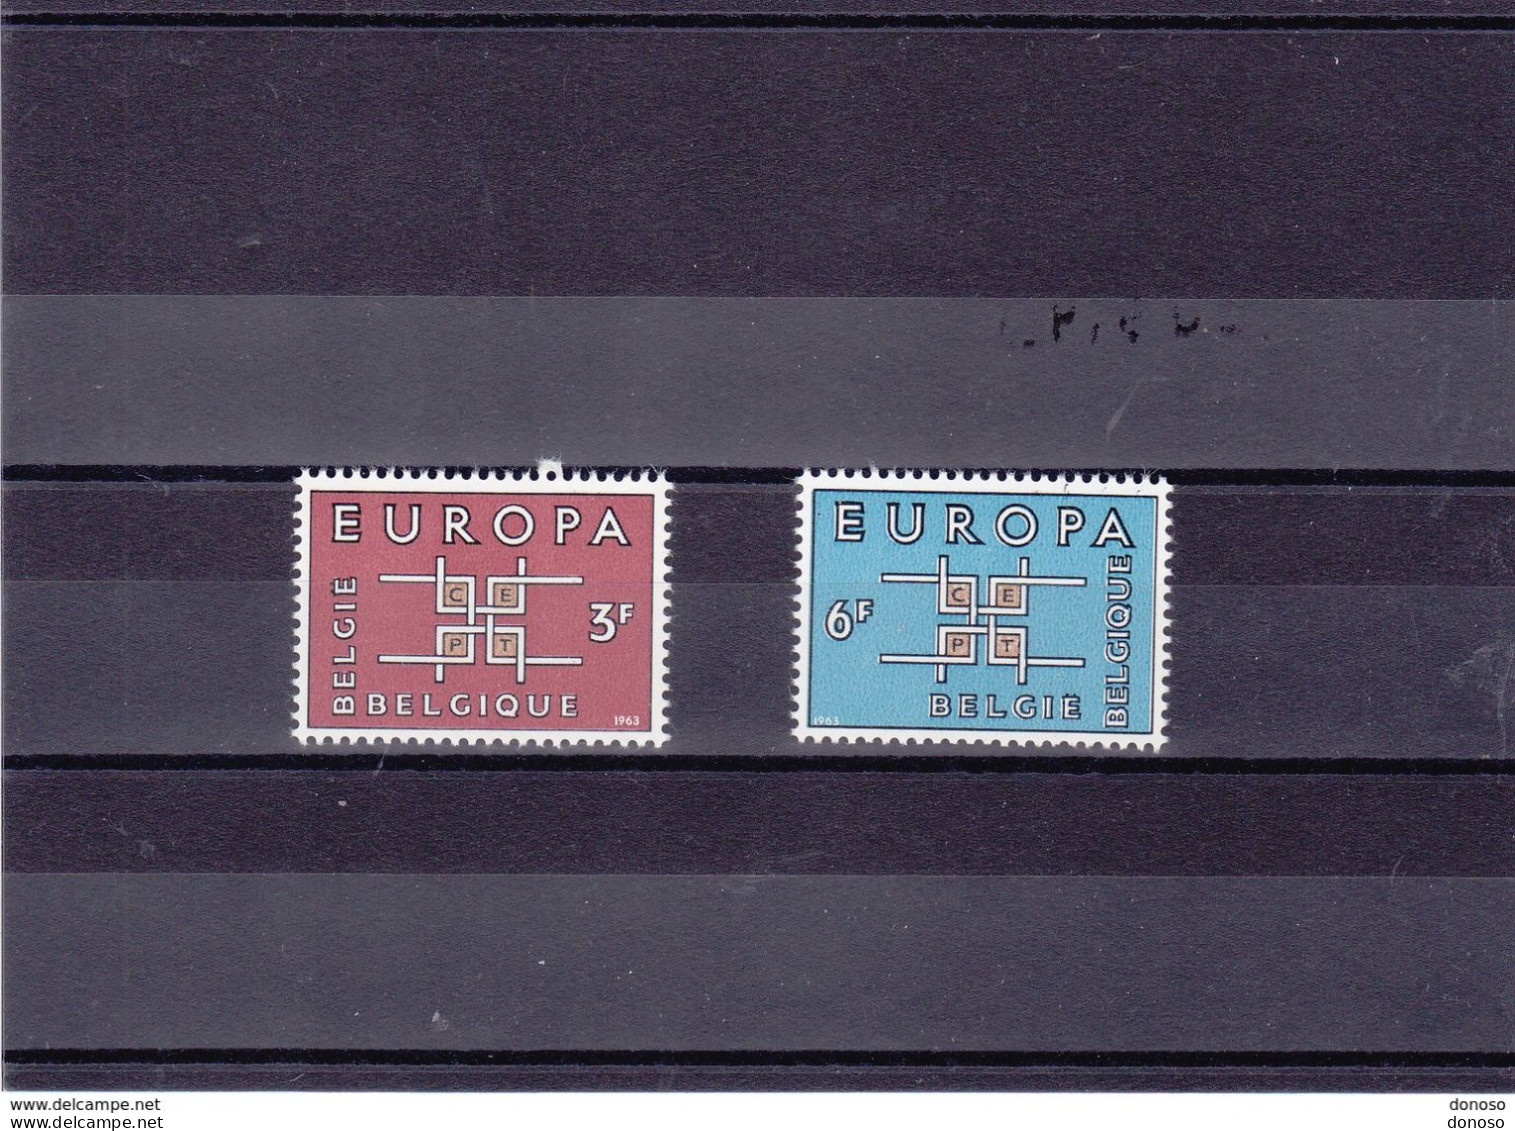 BELGIQUE 1963 EUROPA Yvert 1260-1261, Michel 1320-1321 NEUF** MNH - Unused Stamps